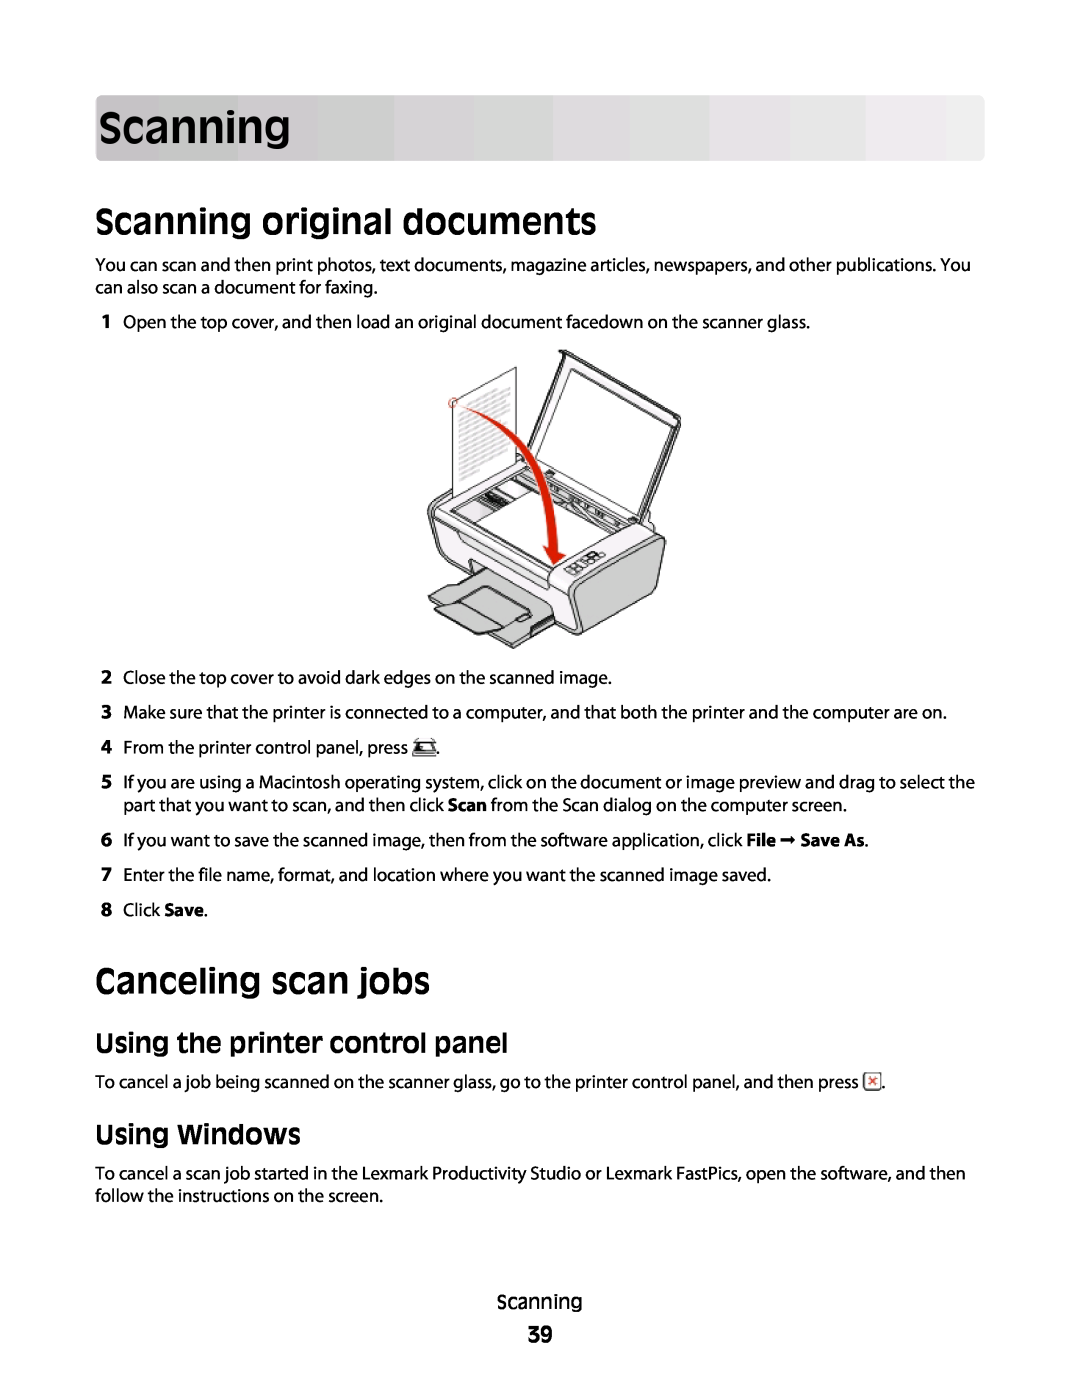 Lexmark 4445, 4433 Scanning original documents, Canceling scan jobs, Using the printer control panel, Using Windows 